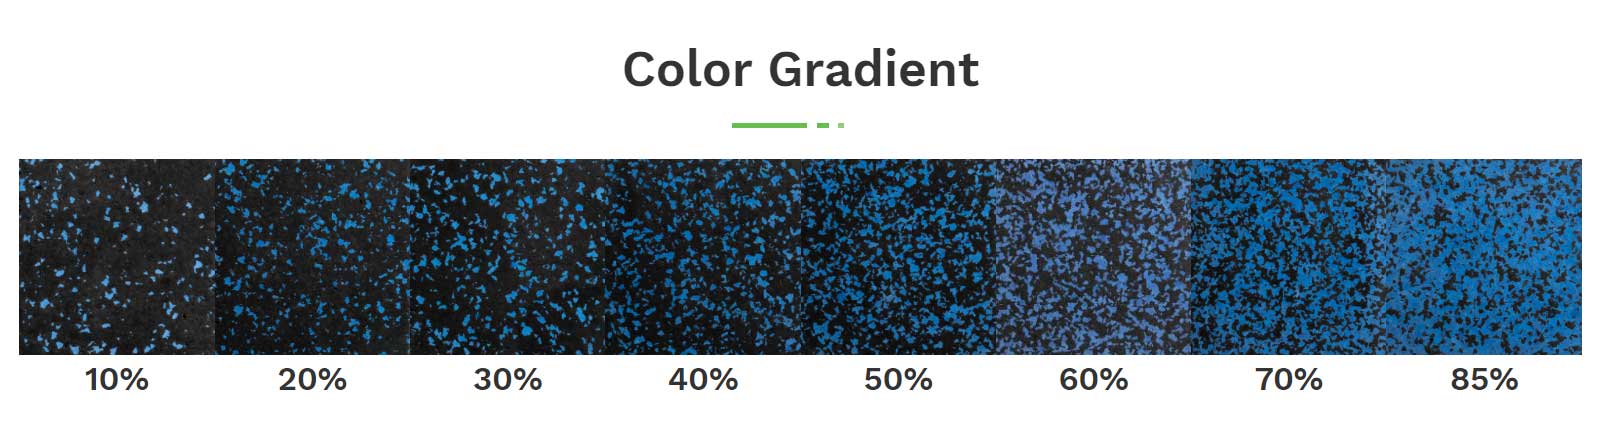 color-gradient.jpg